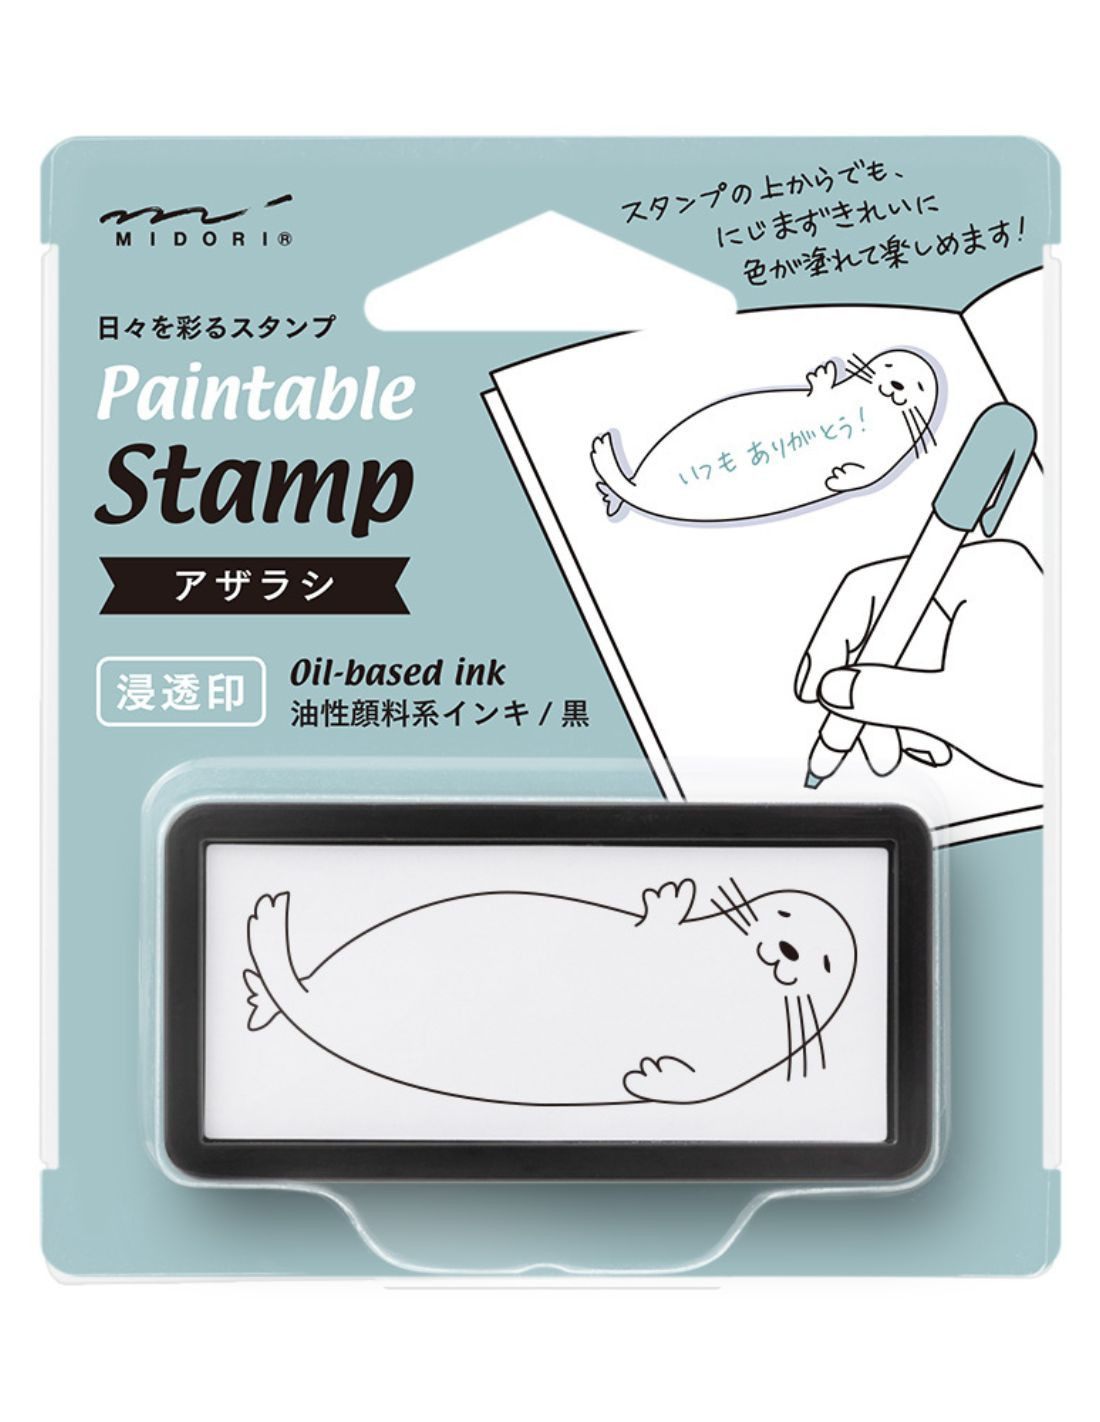 Pre-inked Paintable Stamp - Seal - Midori